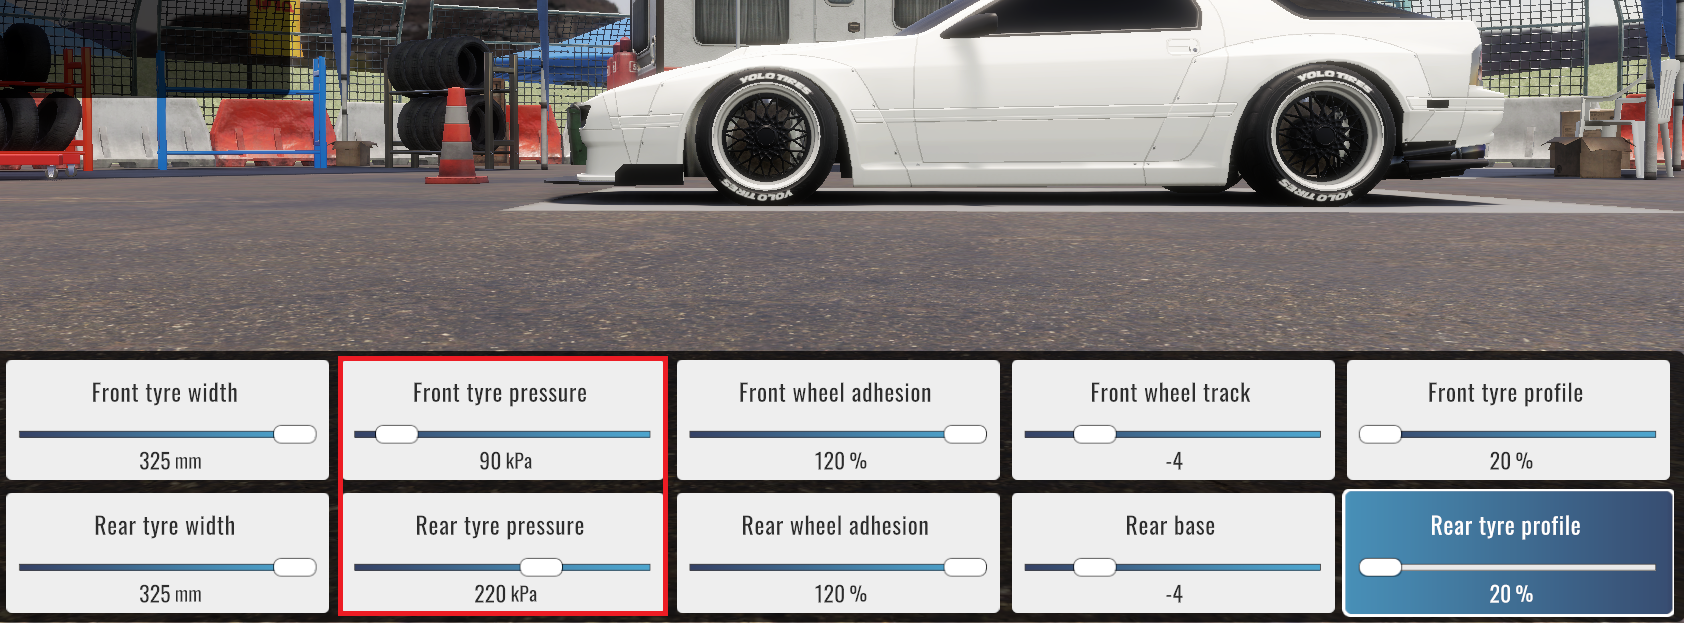 Full Drift Car Tuning Guide - CarX Drift Racing Online 